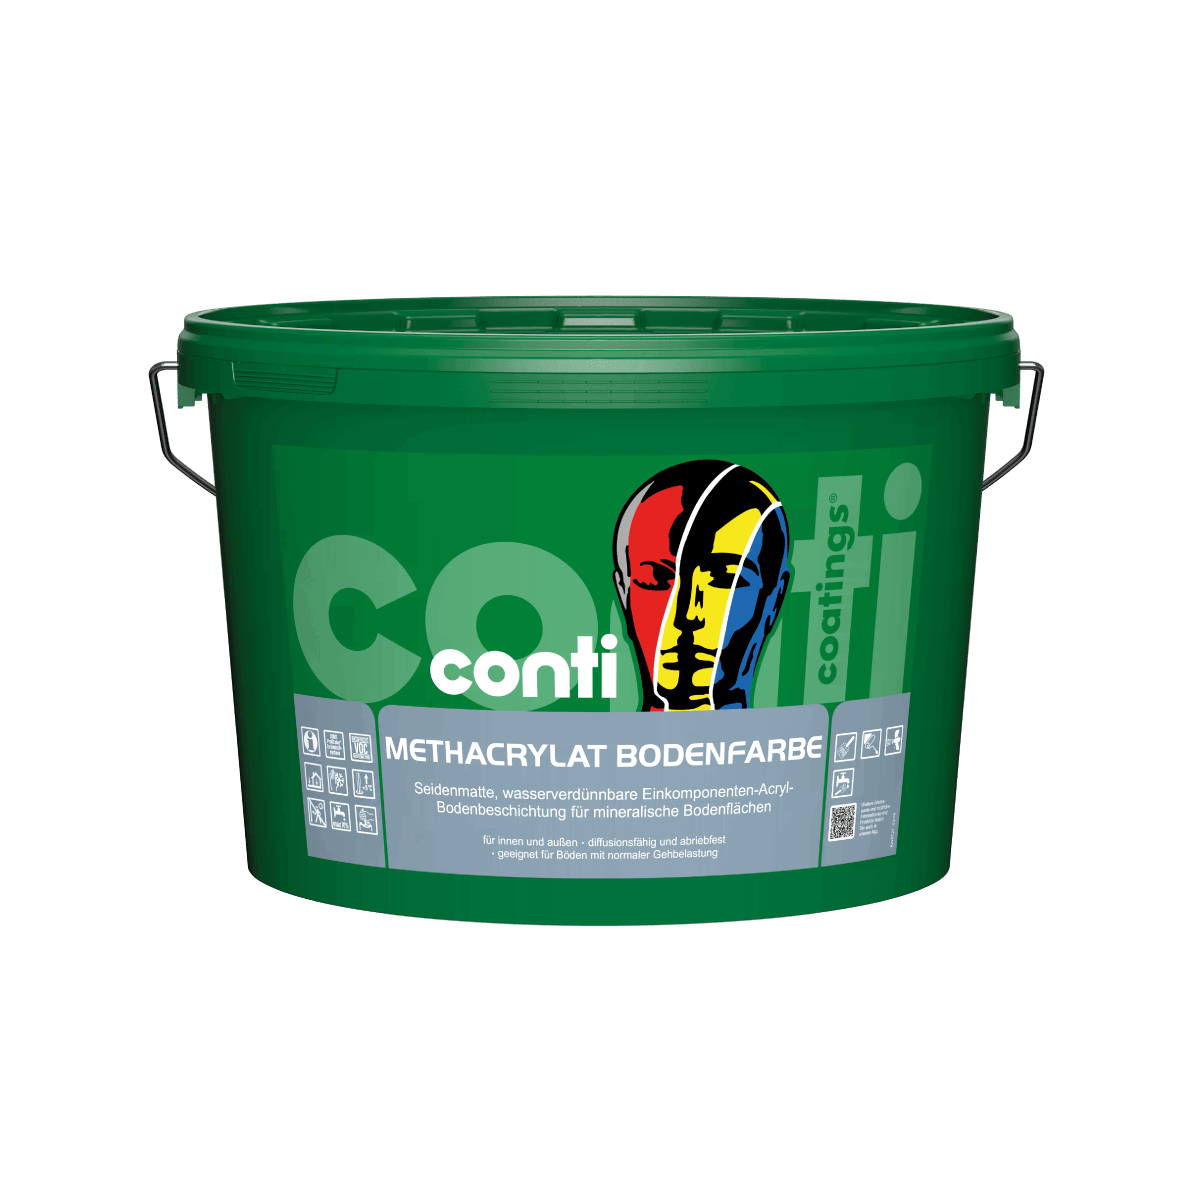 Conti® Methacrylat-Bodenfarbe Bodenbeschichtung von conti coatings